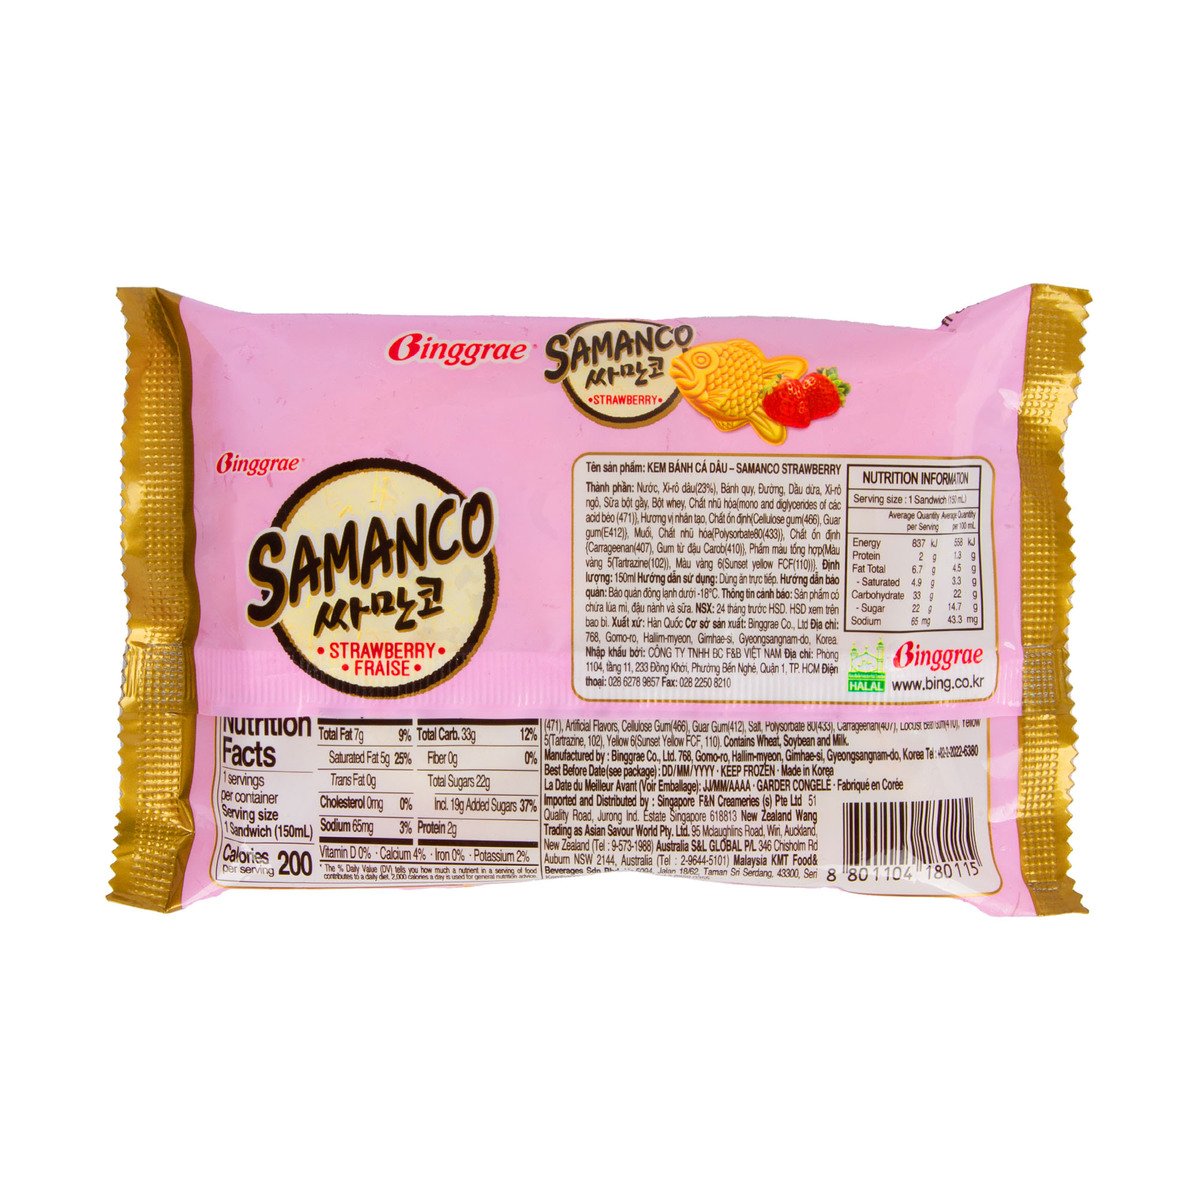 Binggrae Samanco Strawberry Ice Cream Sandwich 150 ml